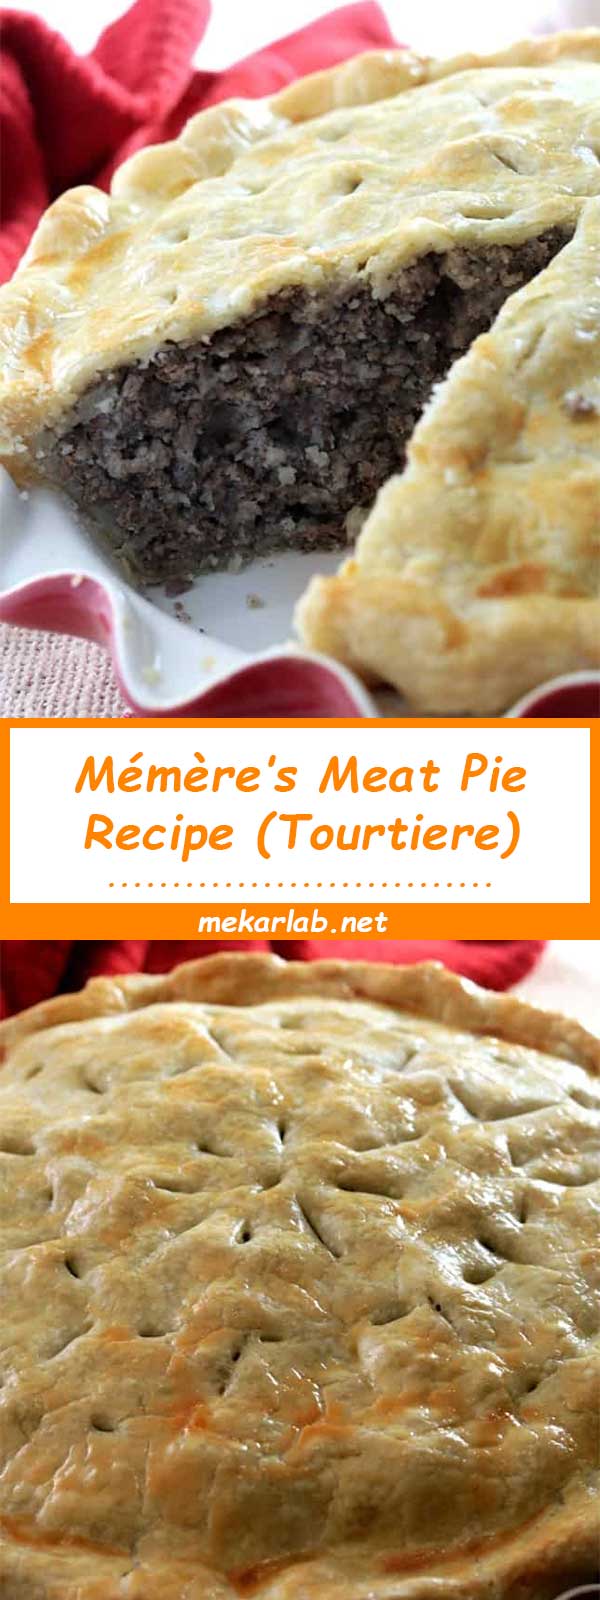 Mémère’s Meat Pie Recipe (Tourtiere)